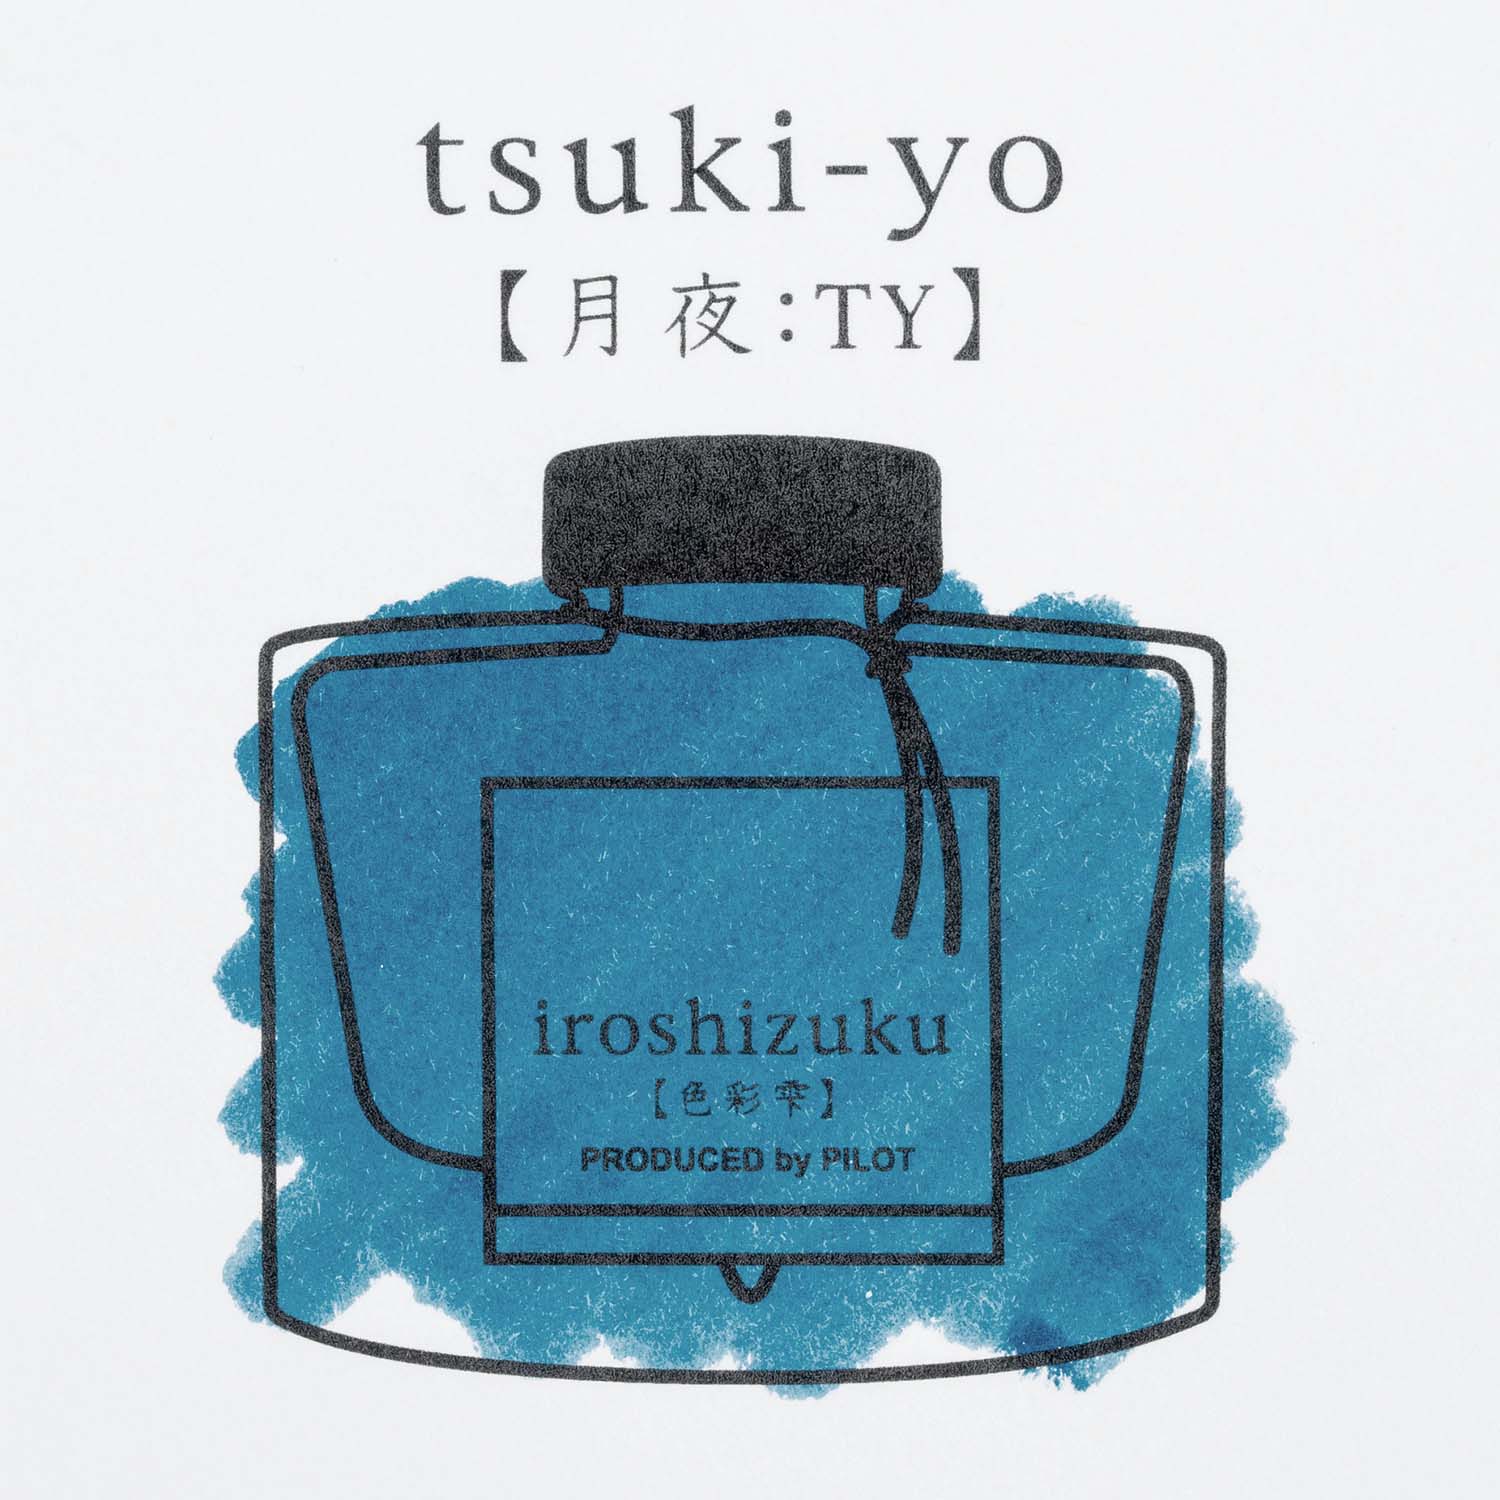 Pilot Iroshizuku Fountain Pen Ink Cartridges - Tsuki-yo (Moonlight) sample